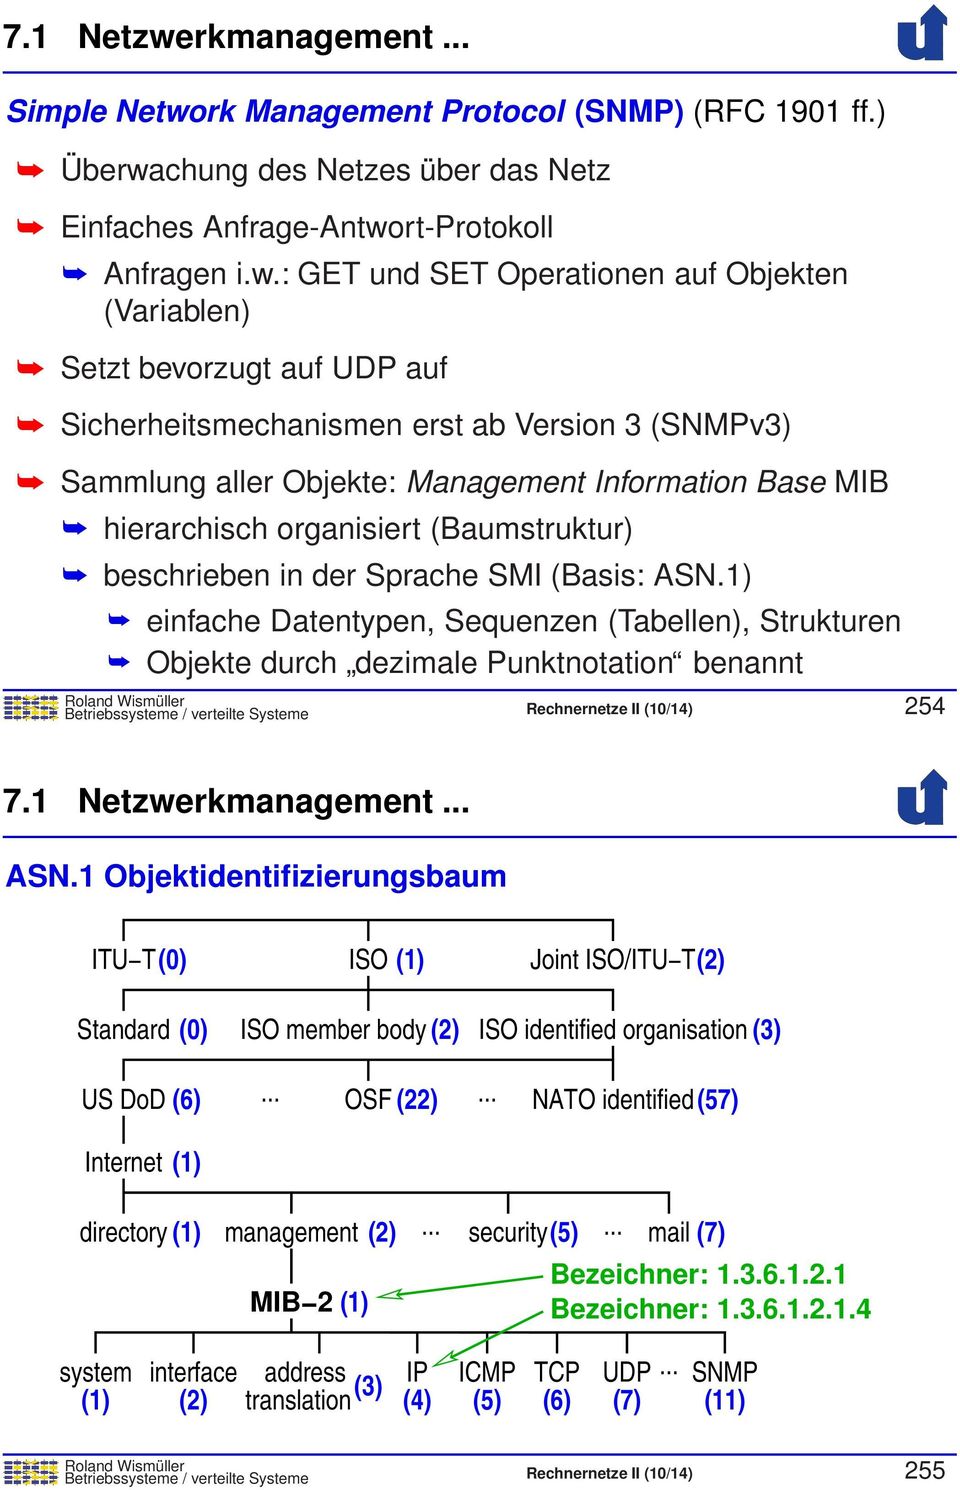 rk Management Protocol (SNMP) (RFC 1901 ff.) Überwa